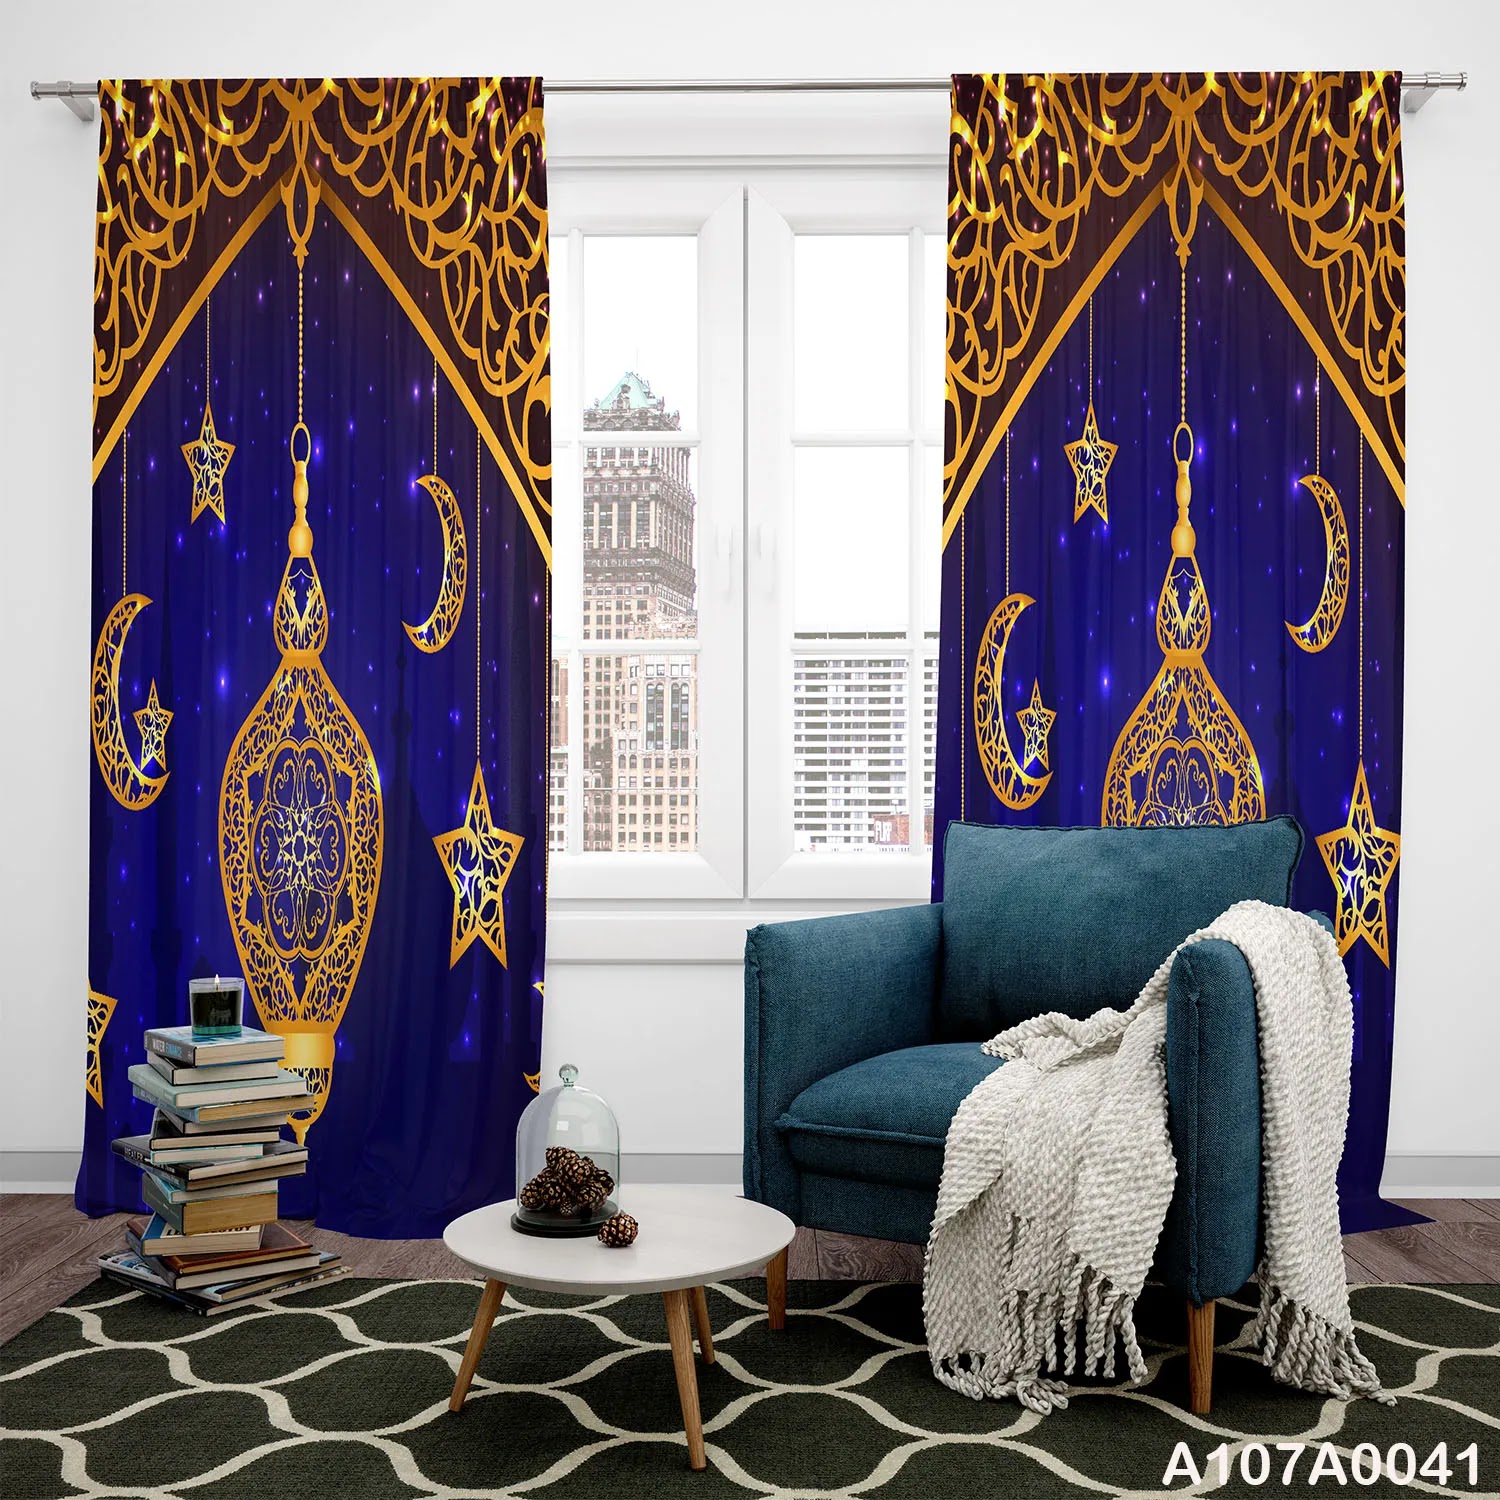 Curtains in navy and gold Ramadan lantern